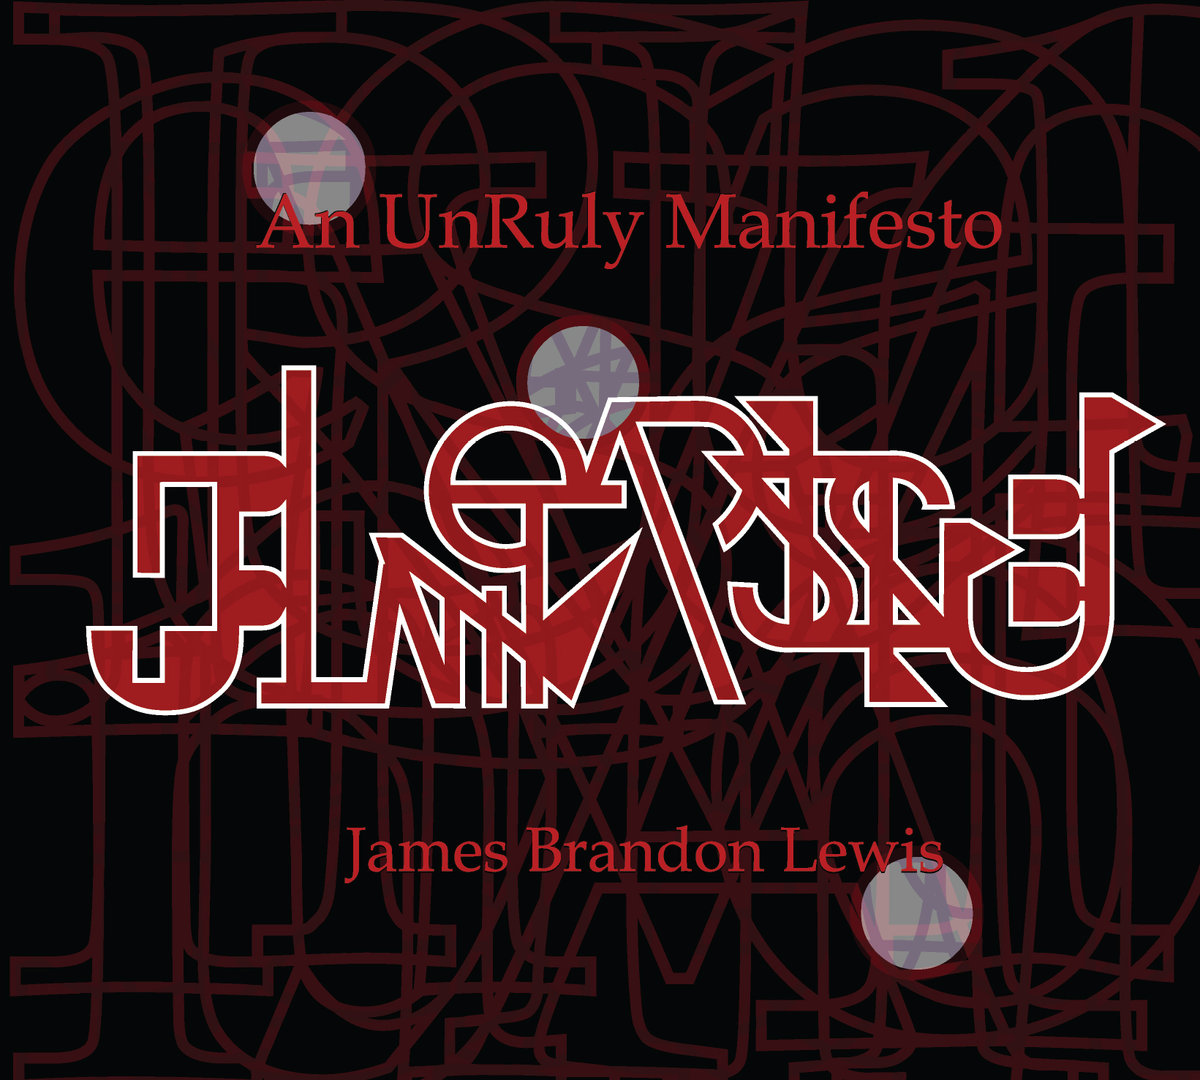 James Brandon Lewis – An Unruly Manifesto